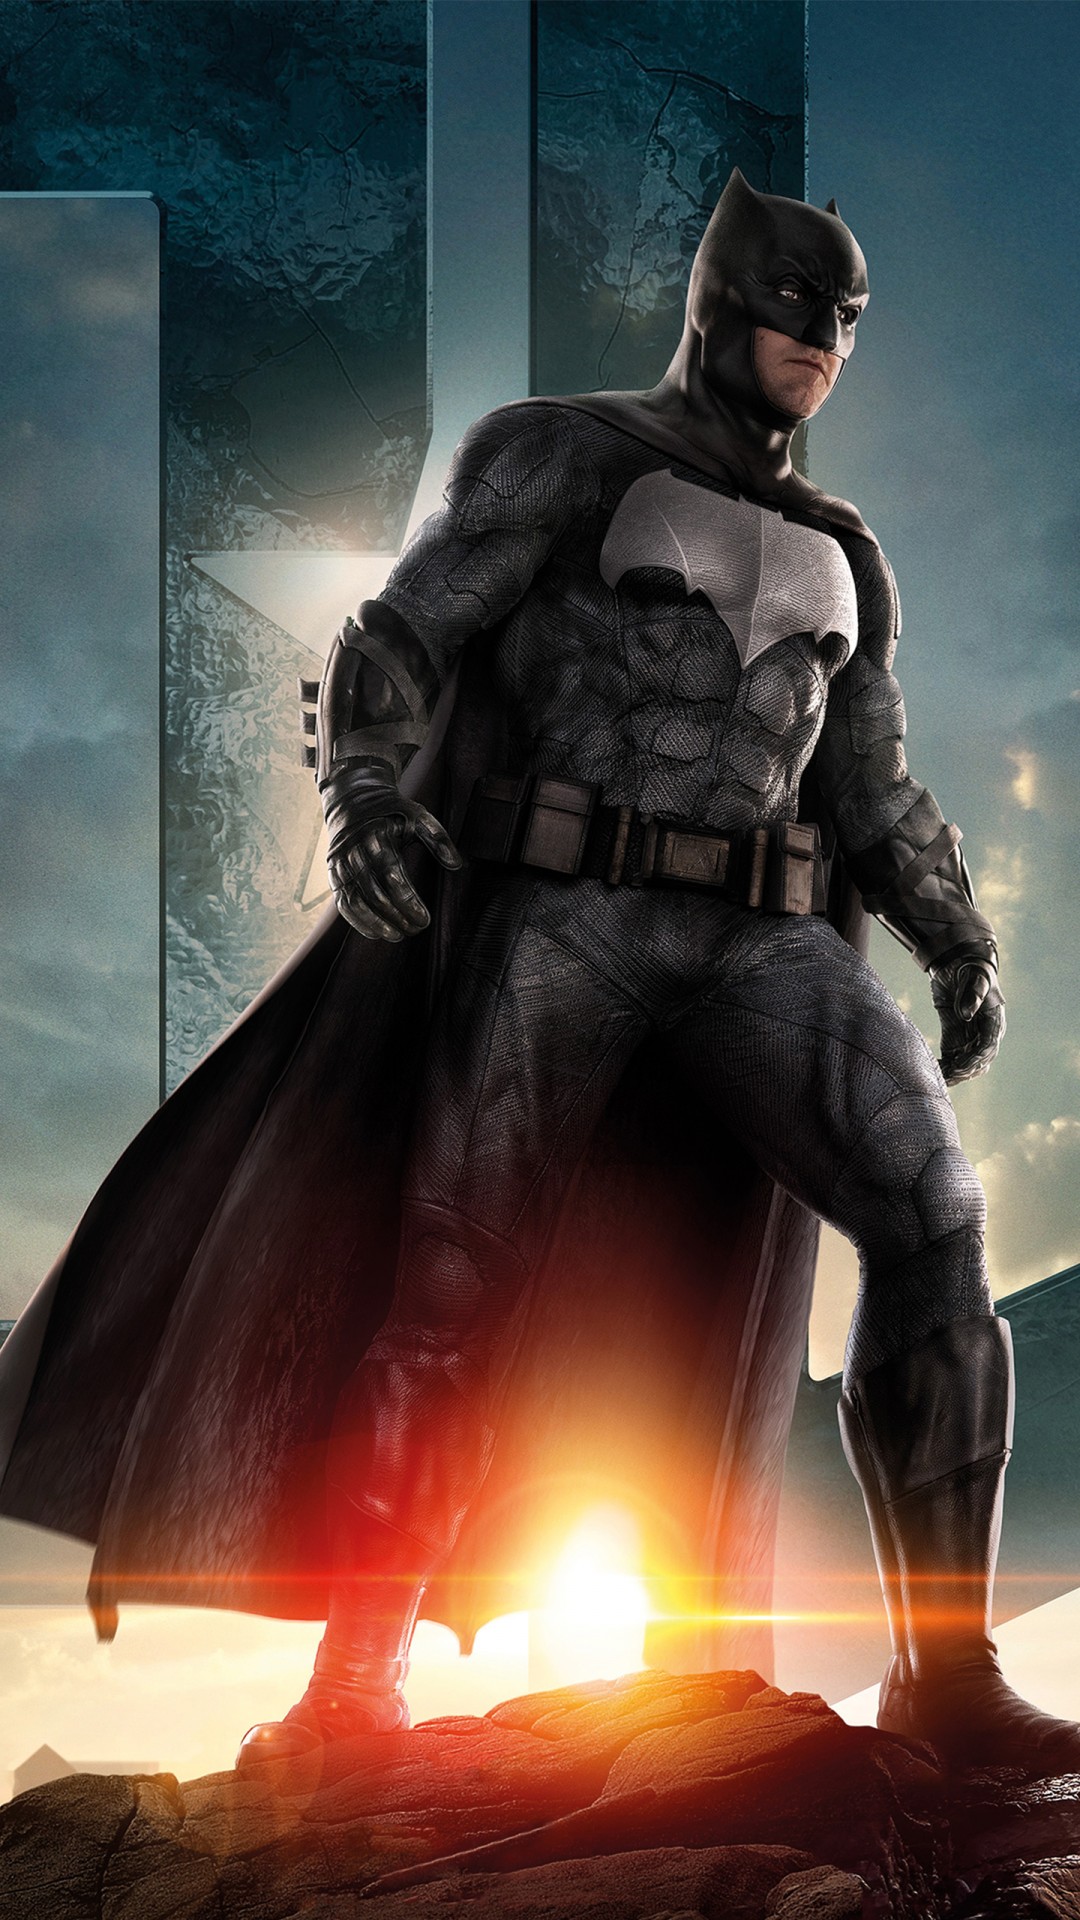 justice league batman wallpaper,batman,cg artwork,fictional character,superhero,justice league